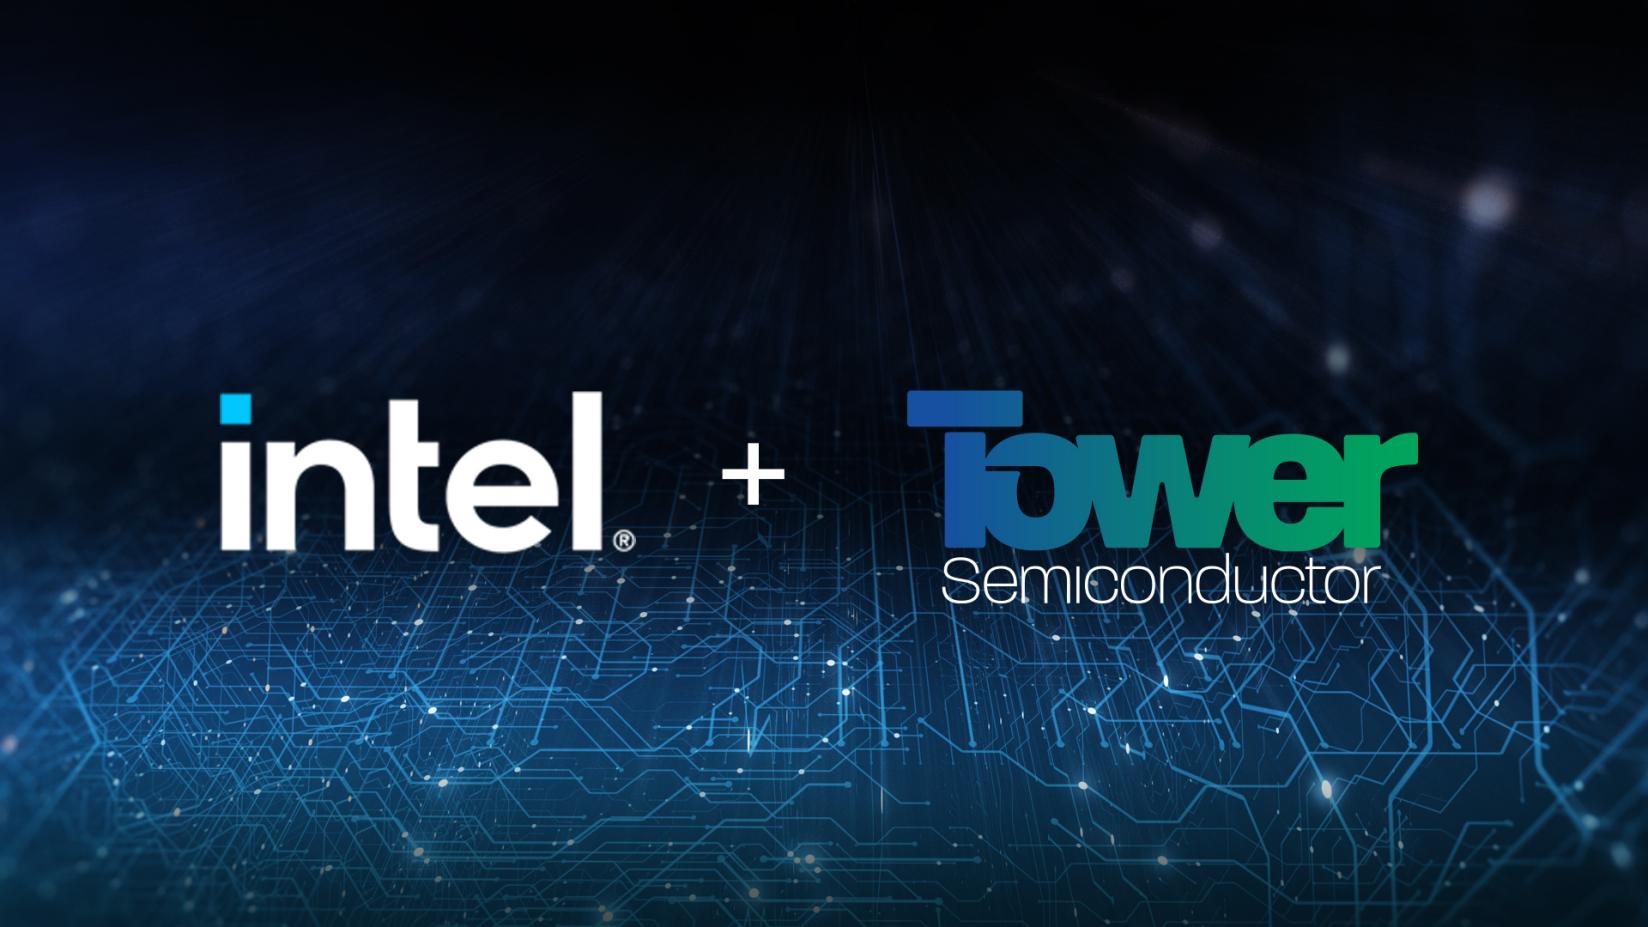 Intel, Tower Semiconductor logos